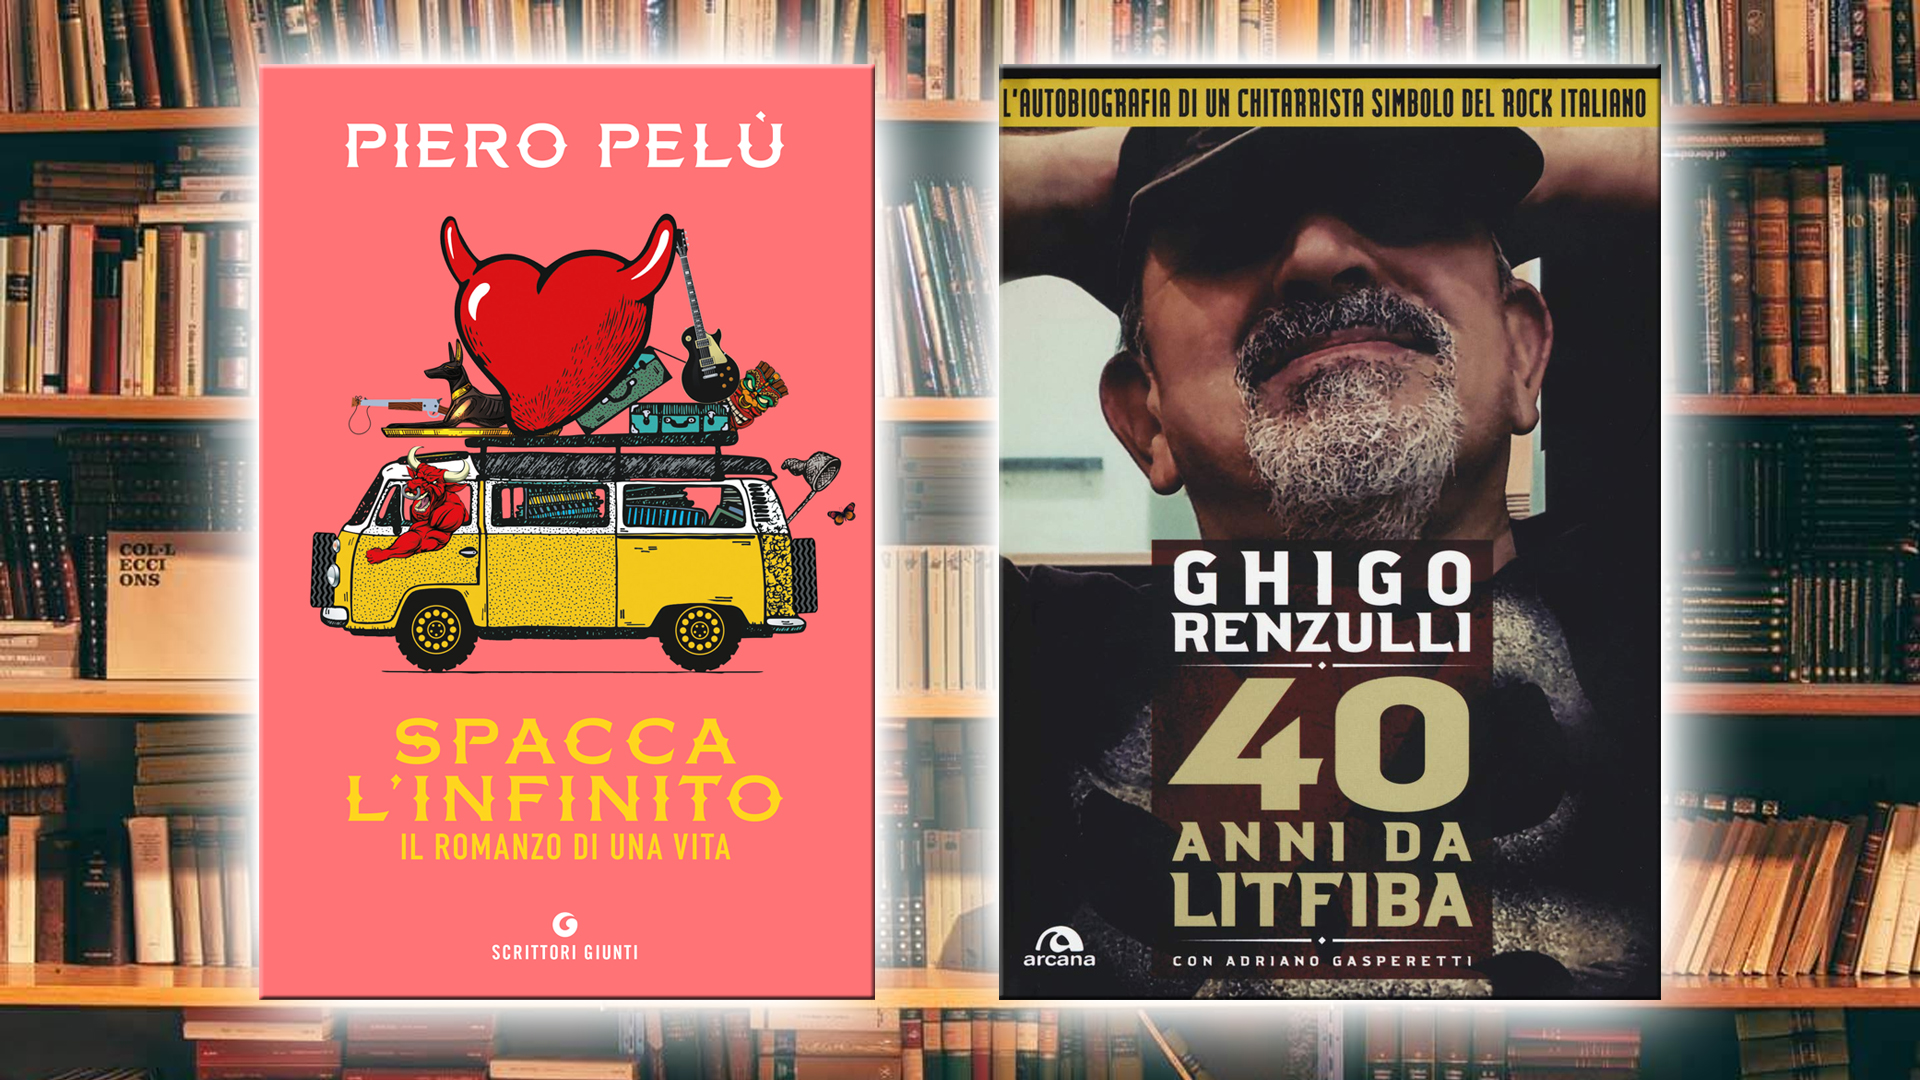 Piero Pelù - Ghigo Renzulli - litfibaunofficial.it